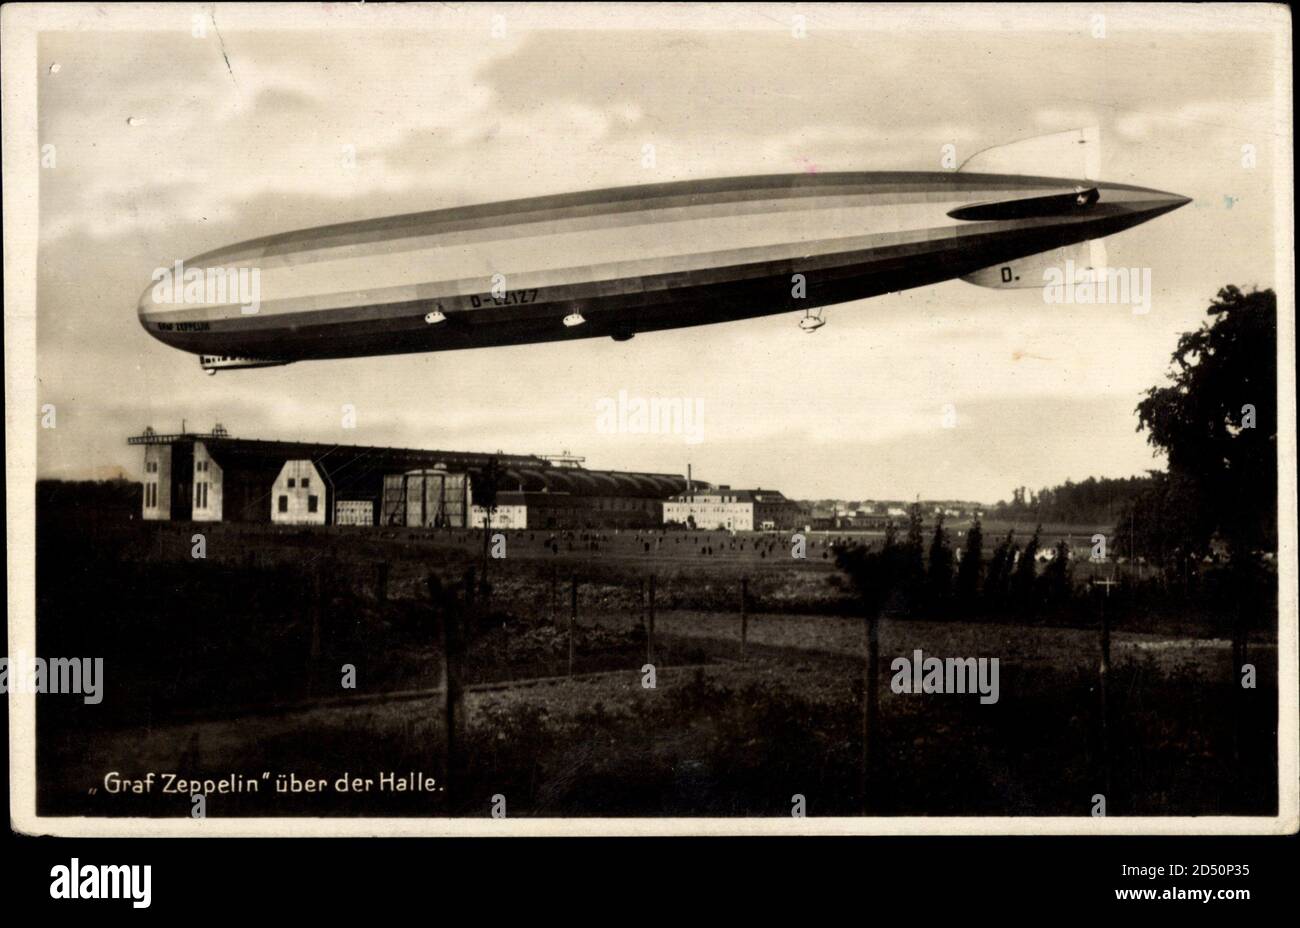 Luftschiff Graf Zeppelin über der Luftschiffhalle | utilisation dans le monde entier Banque D'Images